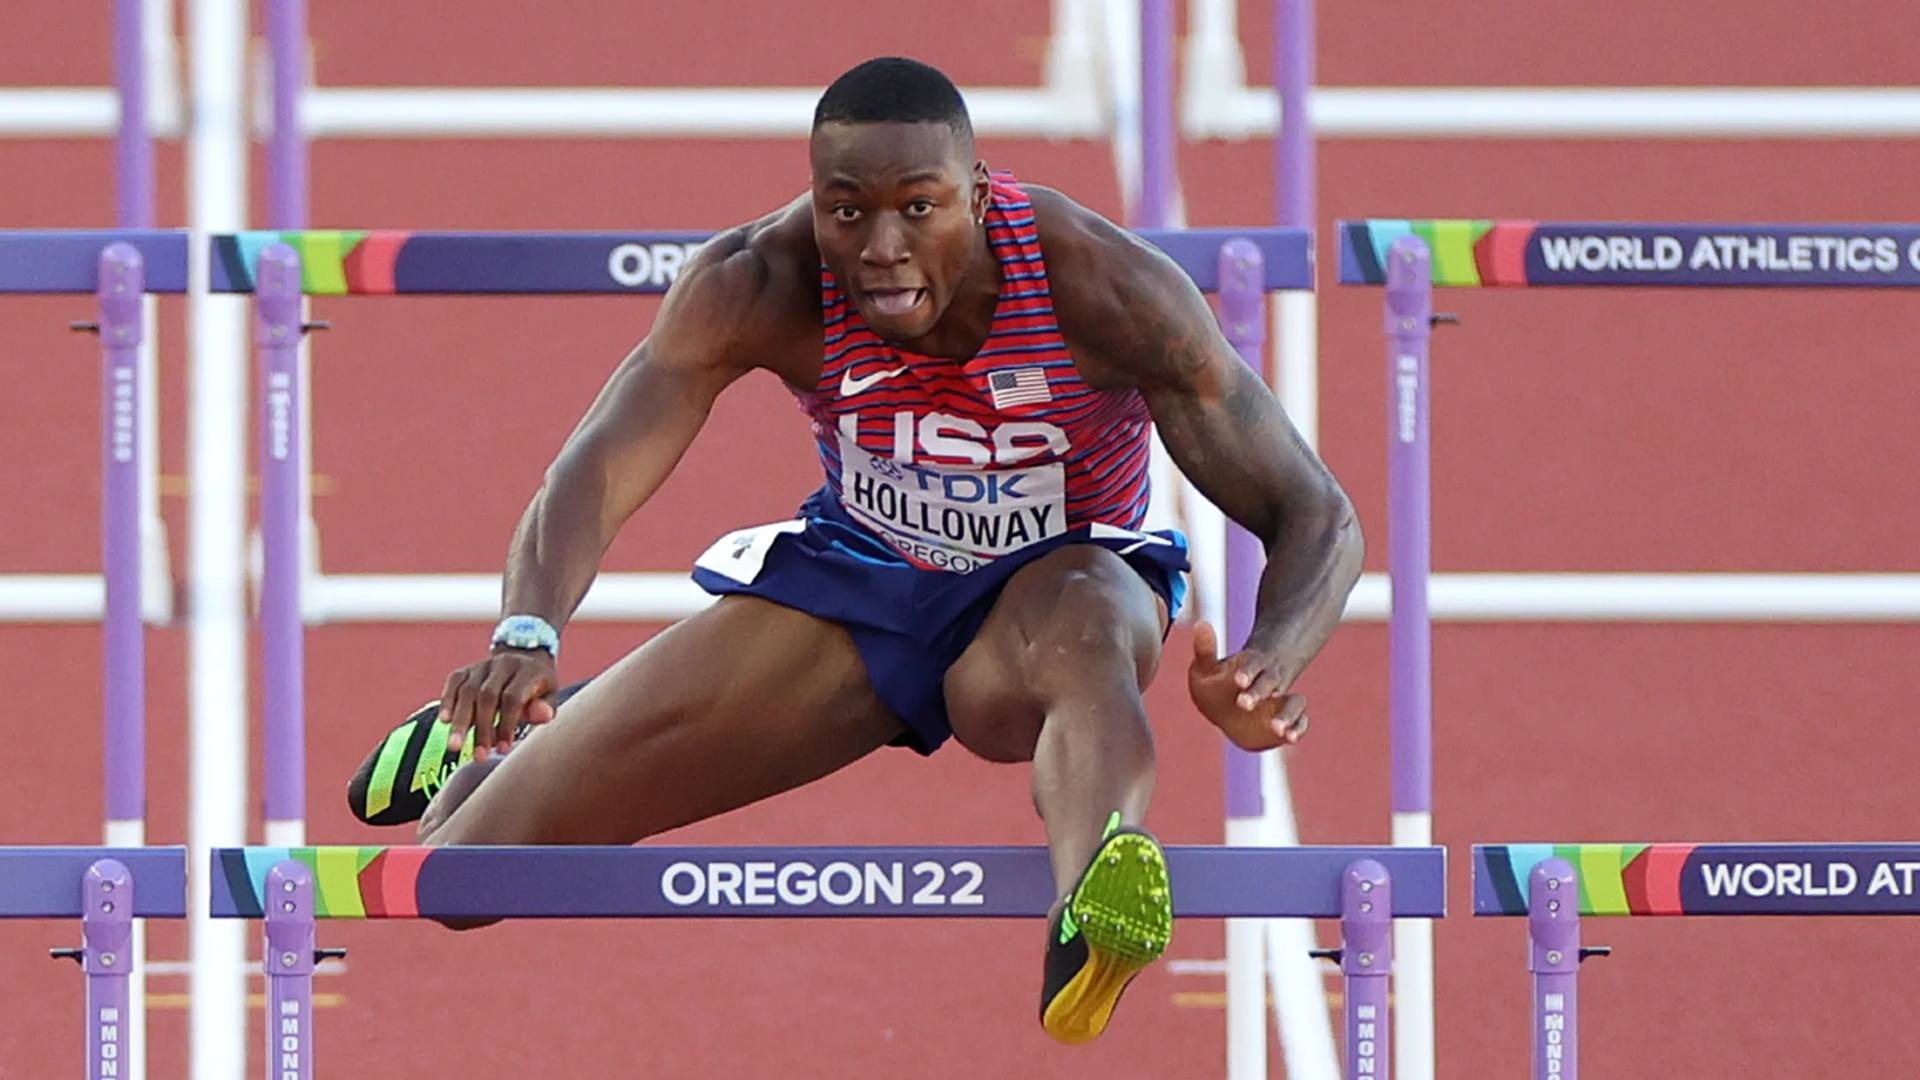 Grant Holloway in action at World Championships Oregon 2022 (Image Credits - Olympics.com)